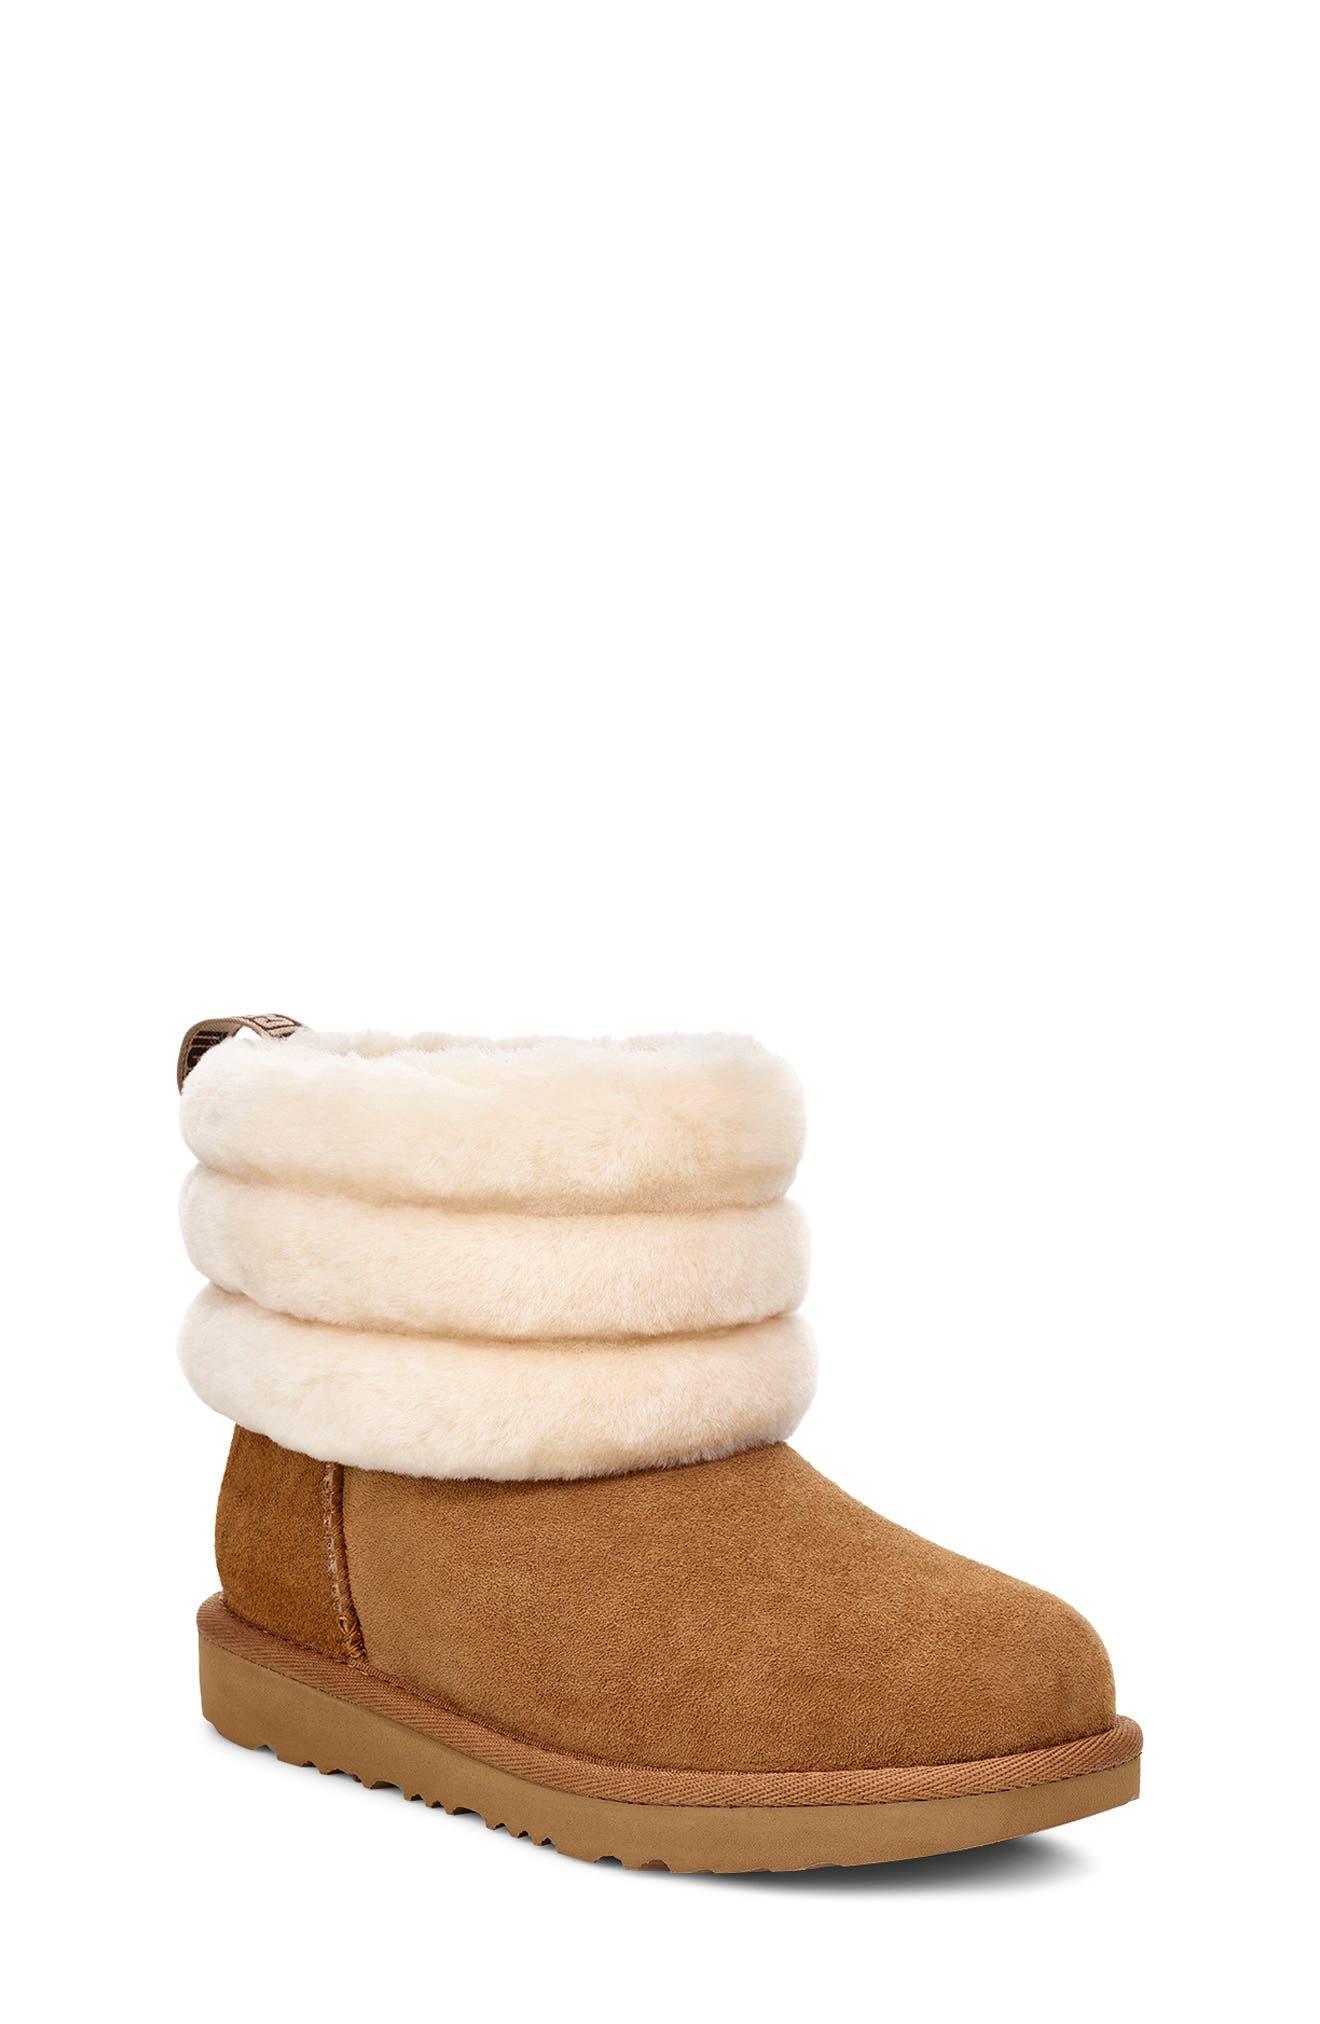 Great Price. Fleece Lined Girls Junior Fuchsia Snowfun Snow Boots